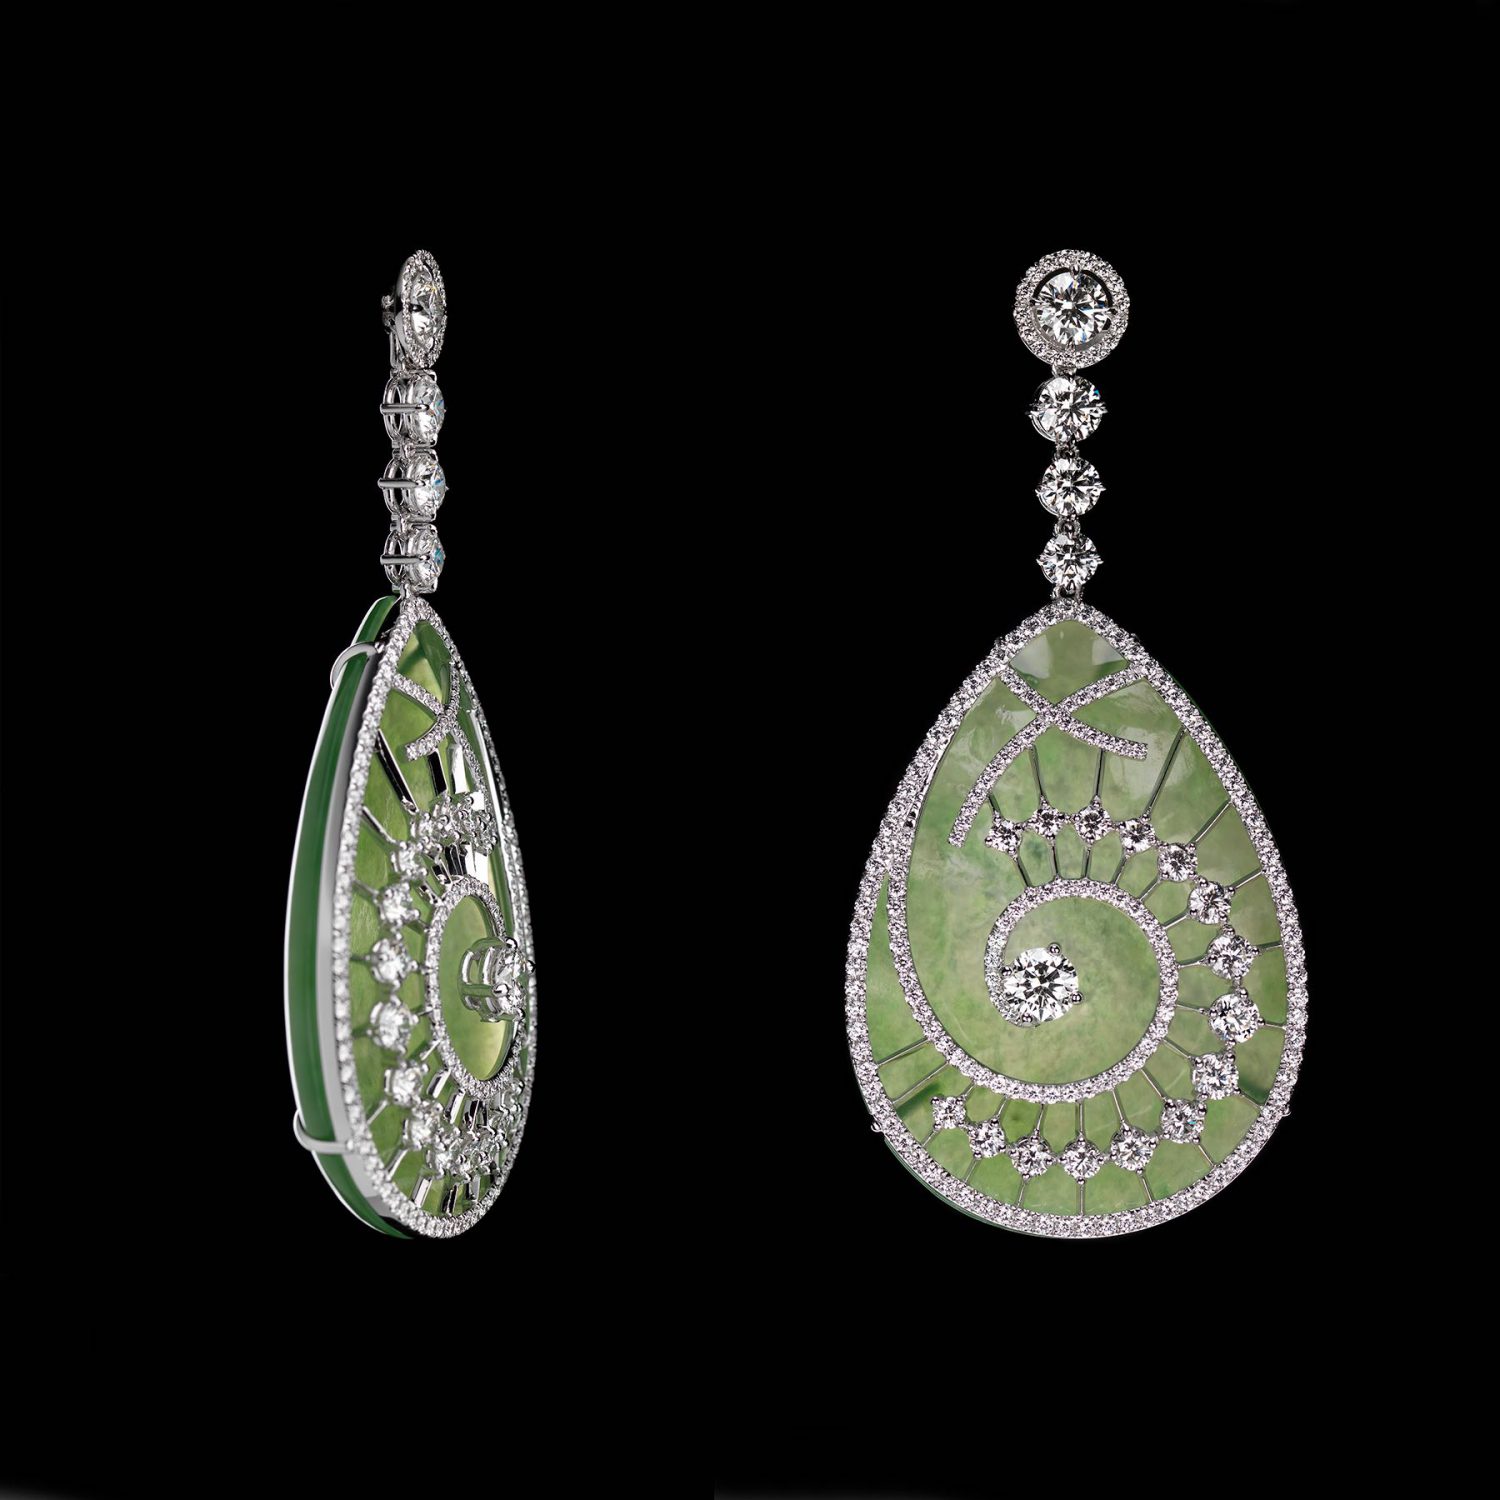 Guinnot One-off 2020 Jade and Diamond Earrings